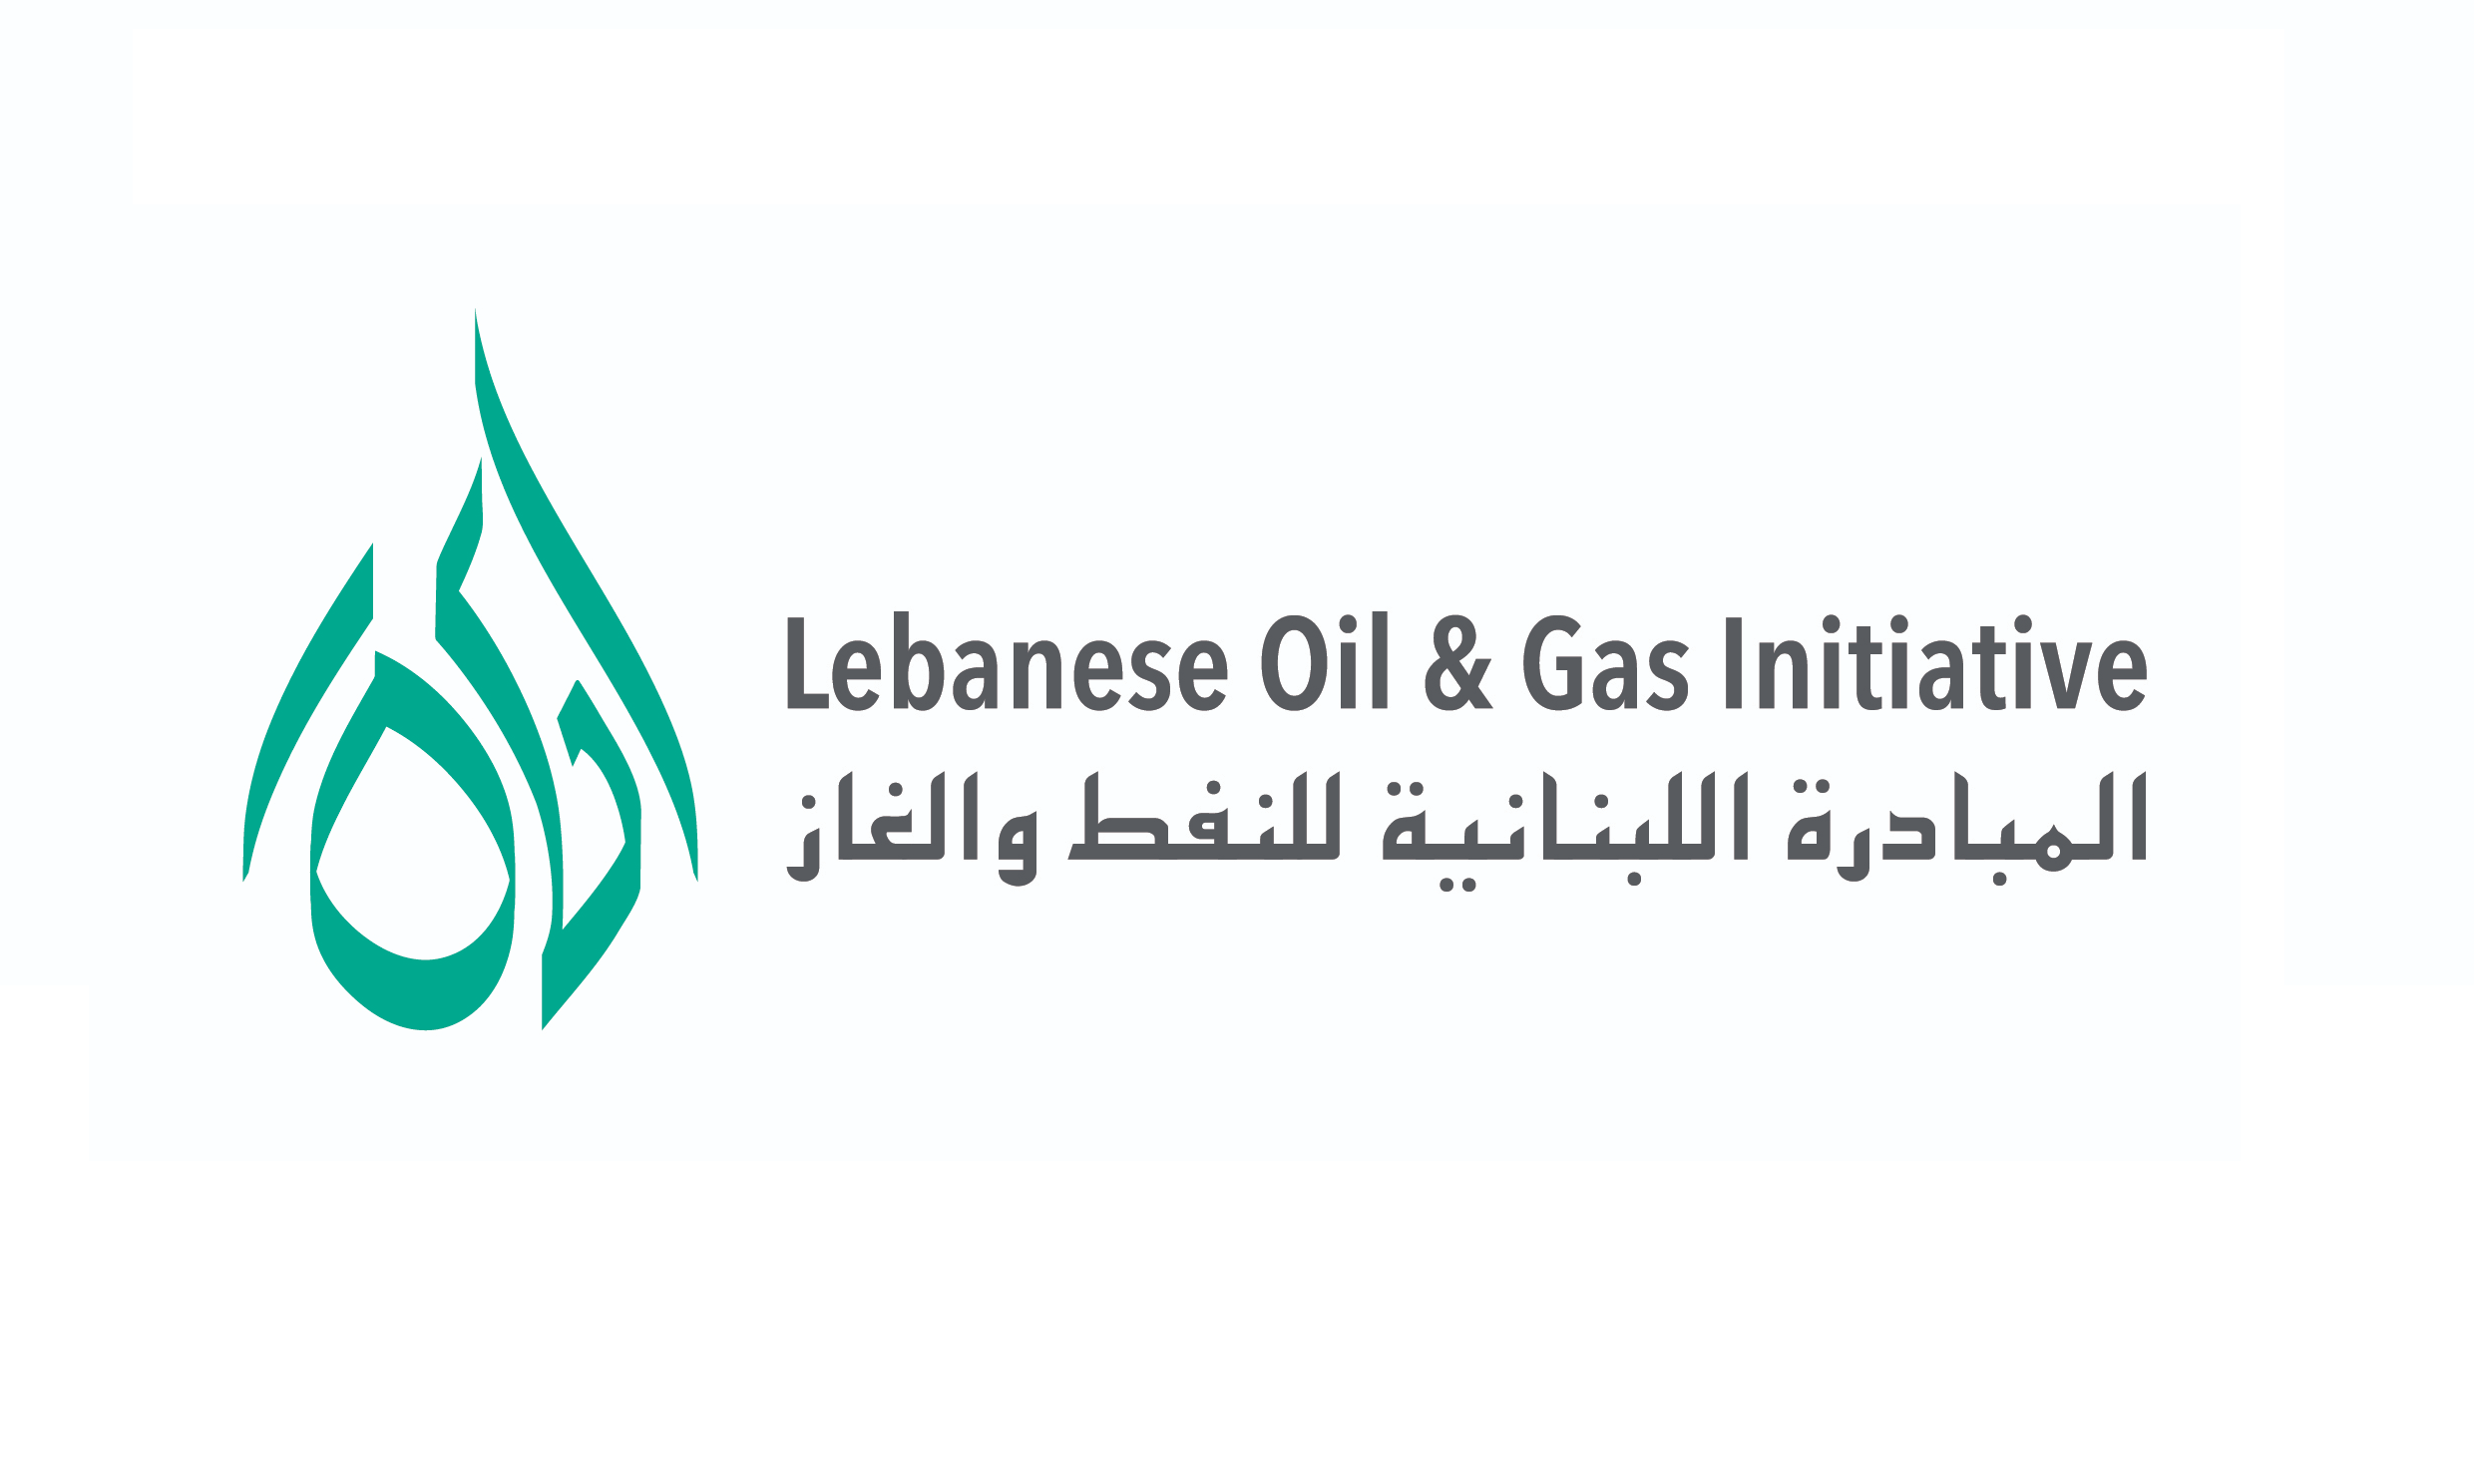 Logi debate: Should Lebanon pursue O&G exploration despite the rise of renewables and decarbonization?